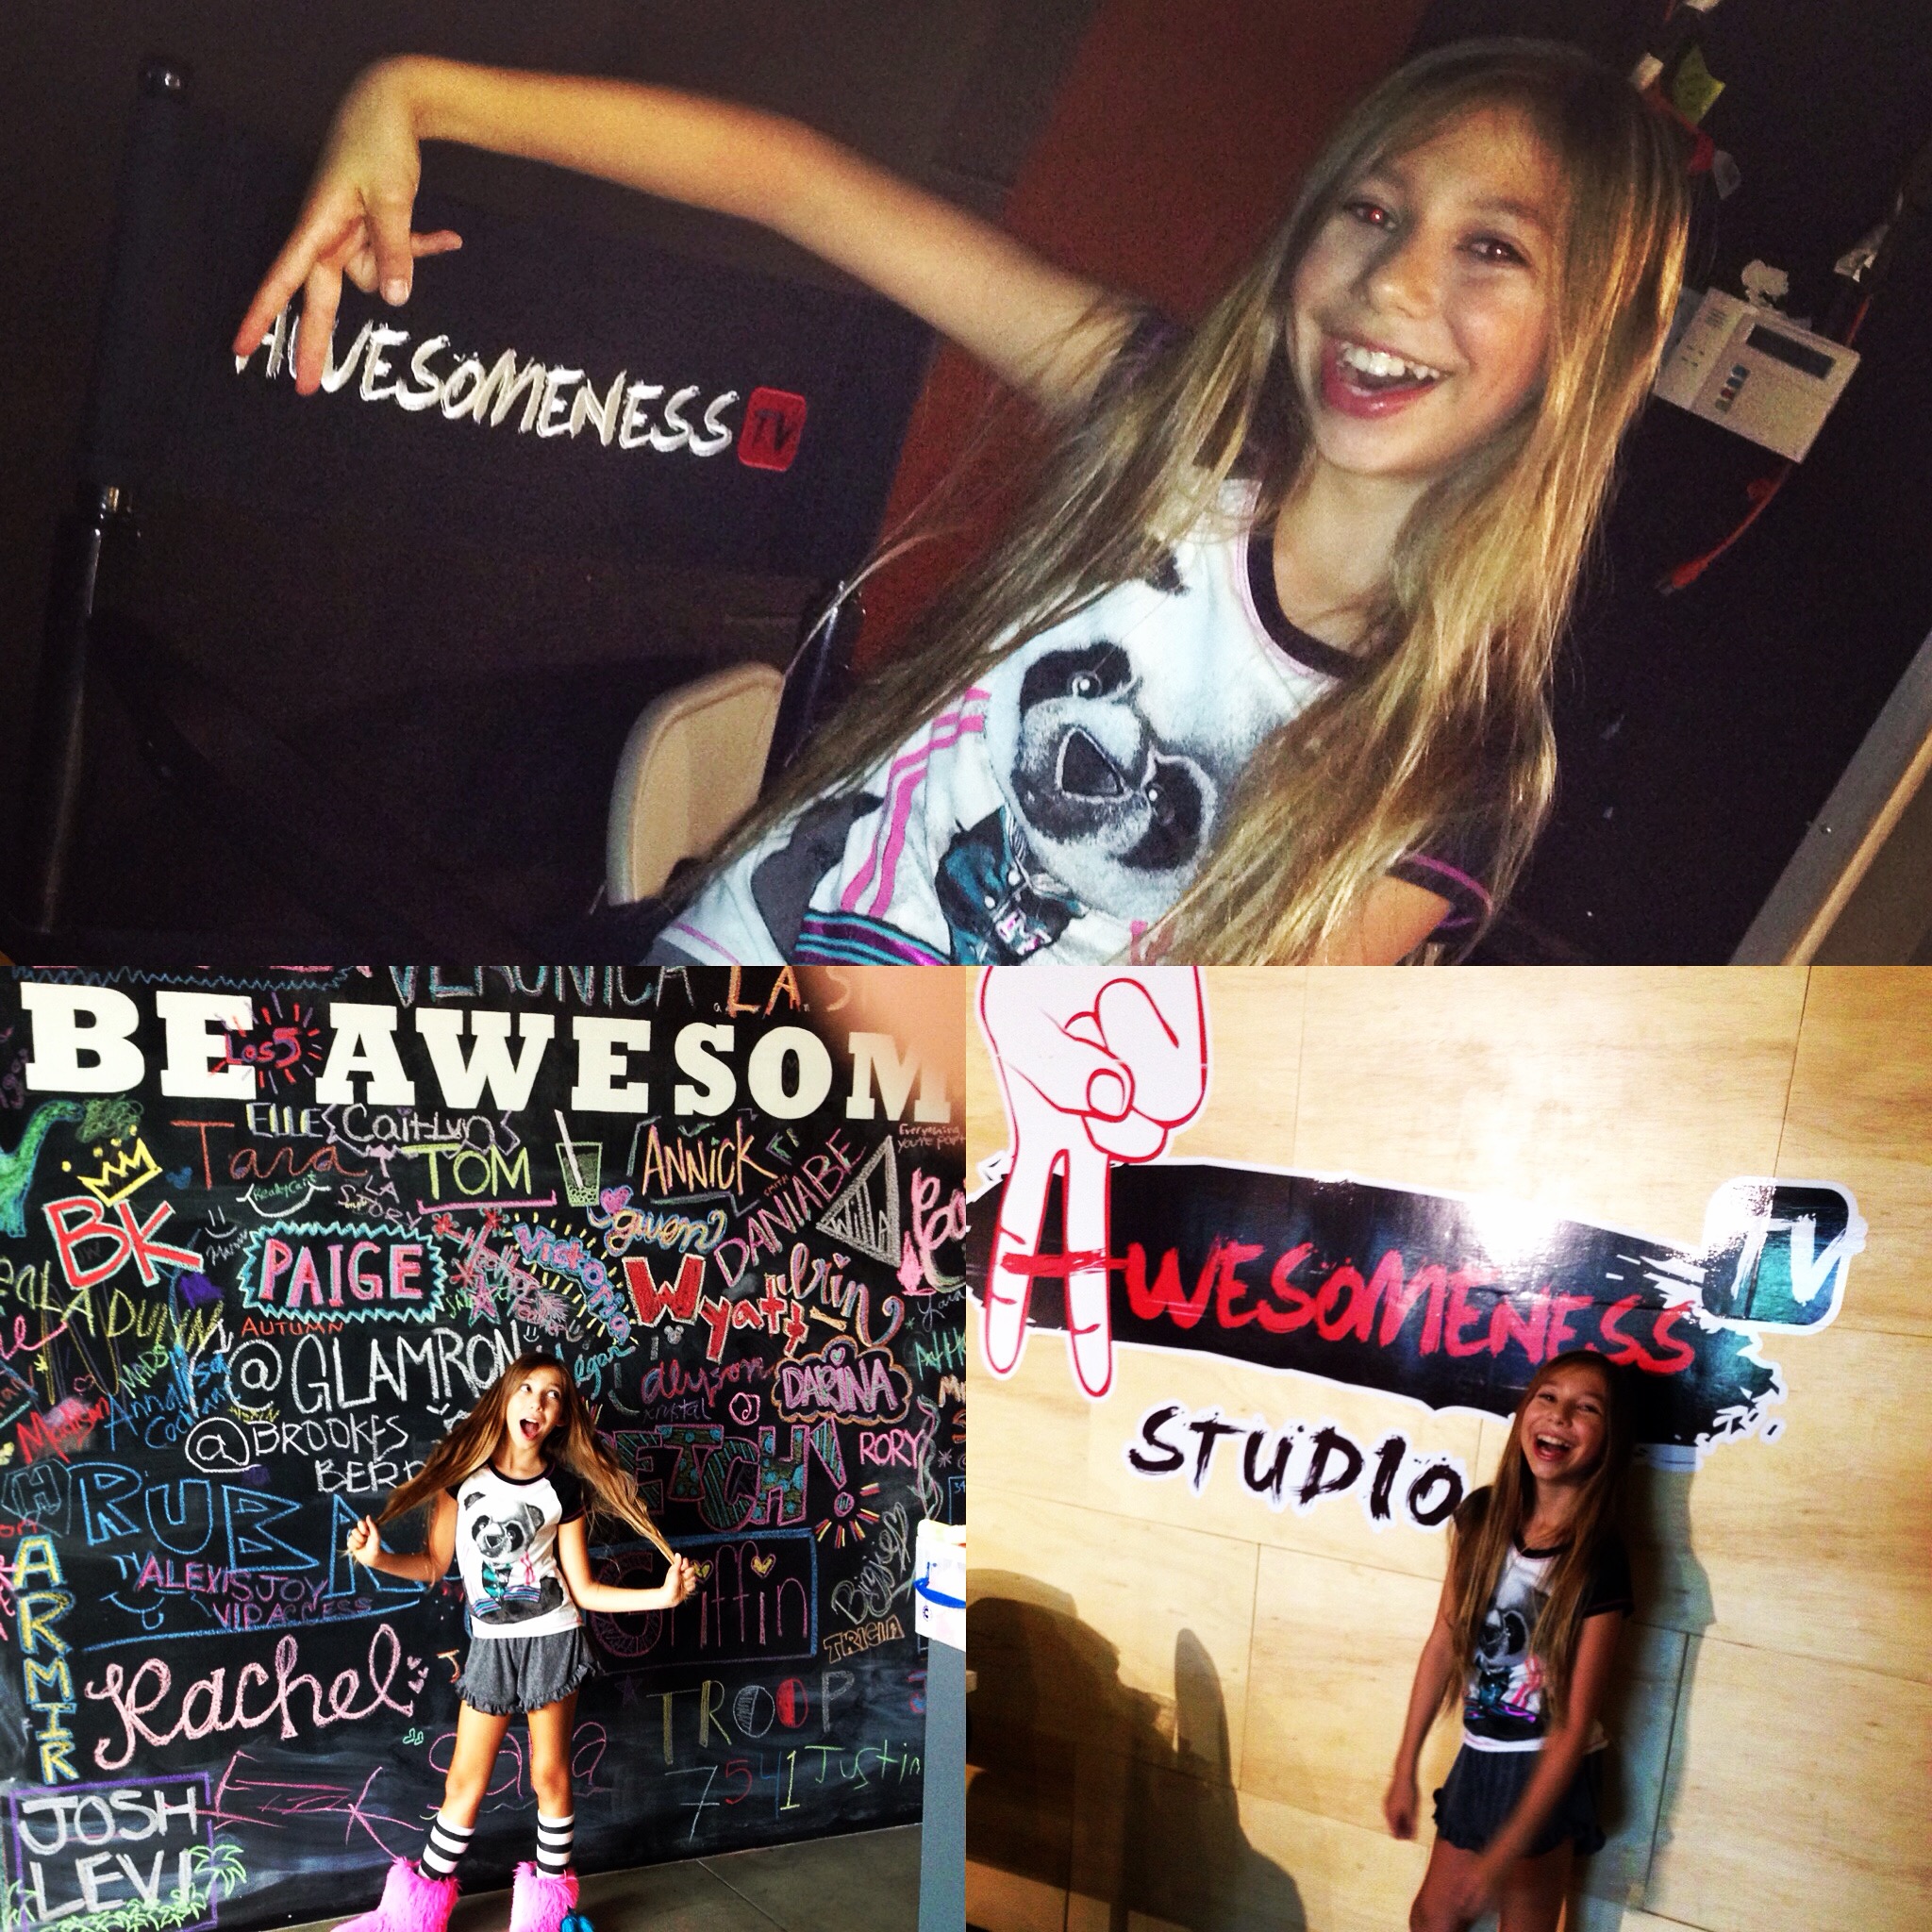 AwesomenessTV Studios